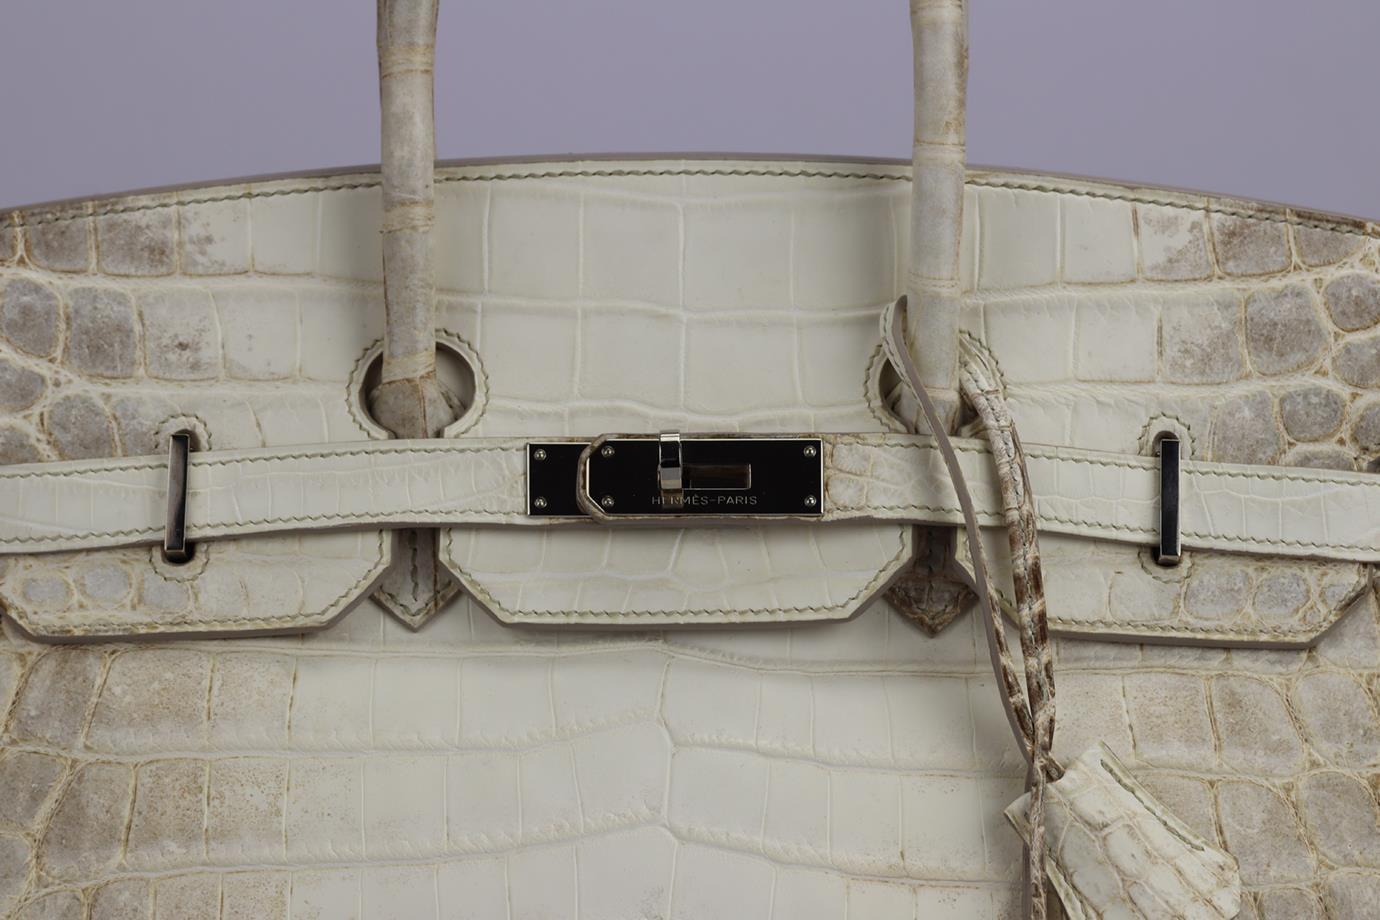 Hermès 2011 Birkin 35cm Himalayan Matte Niloticus Crocodile Bag In Excellent Condition For Sale In London, GB